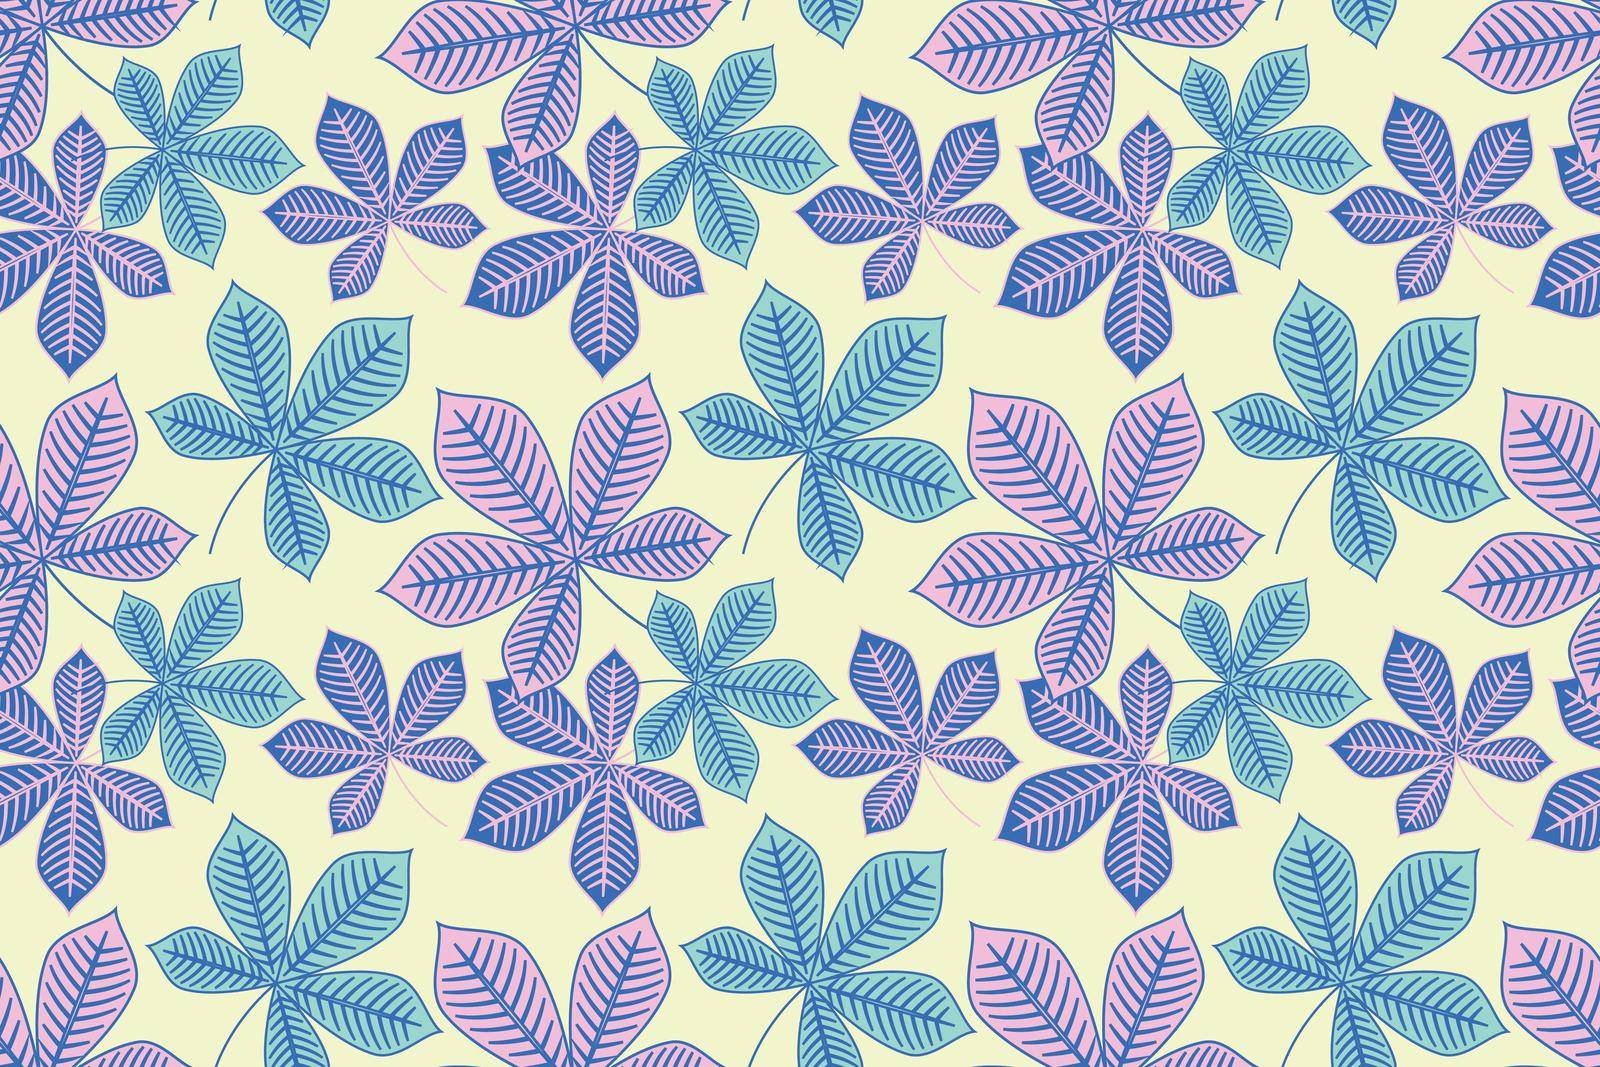 Flower Fabric Design by GiraffeStockStudio